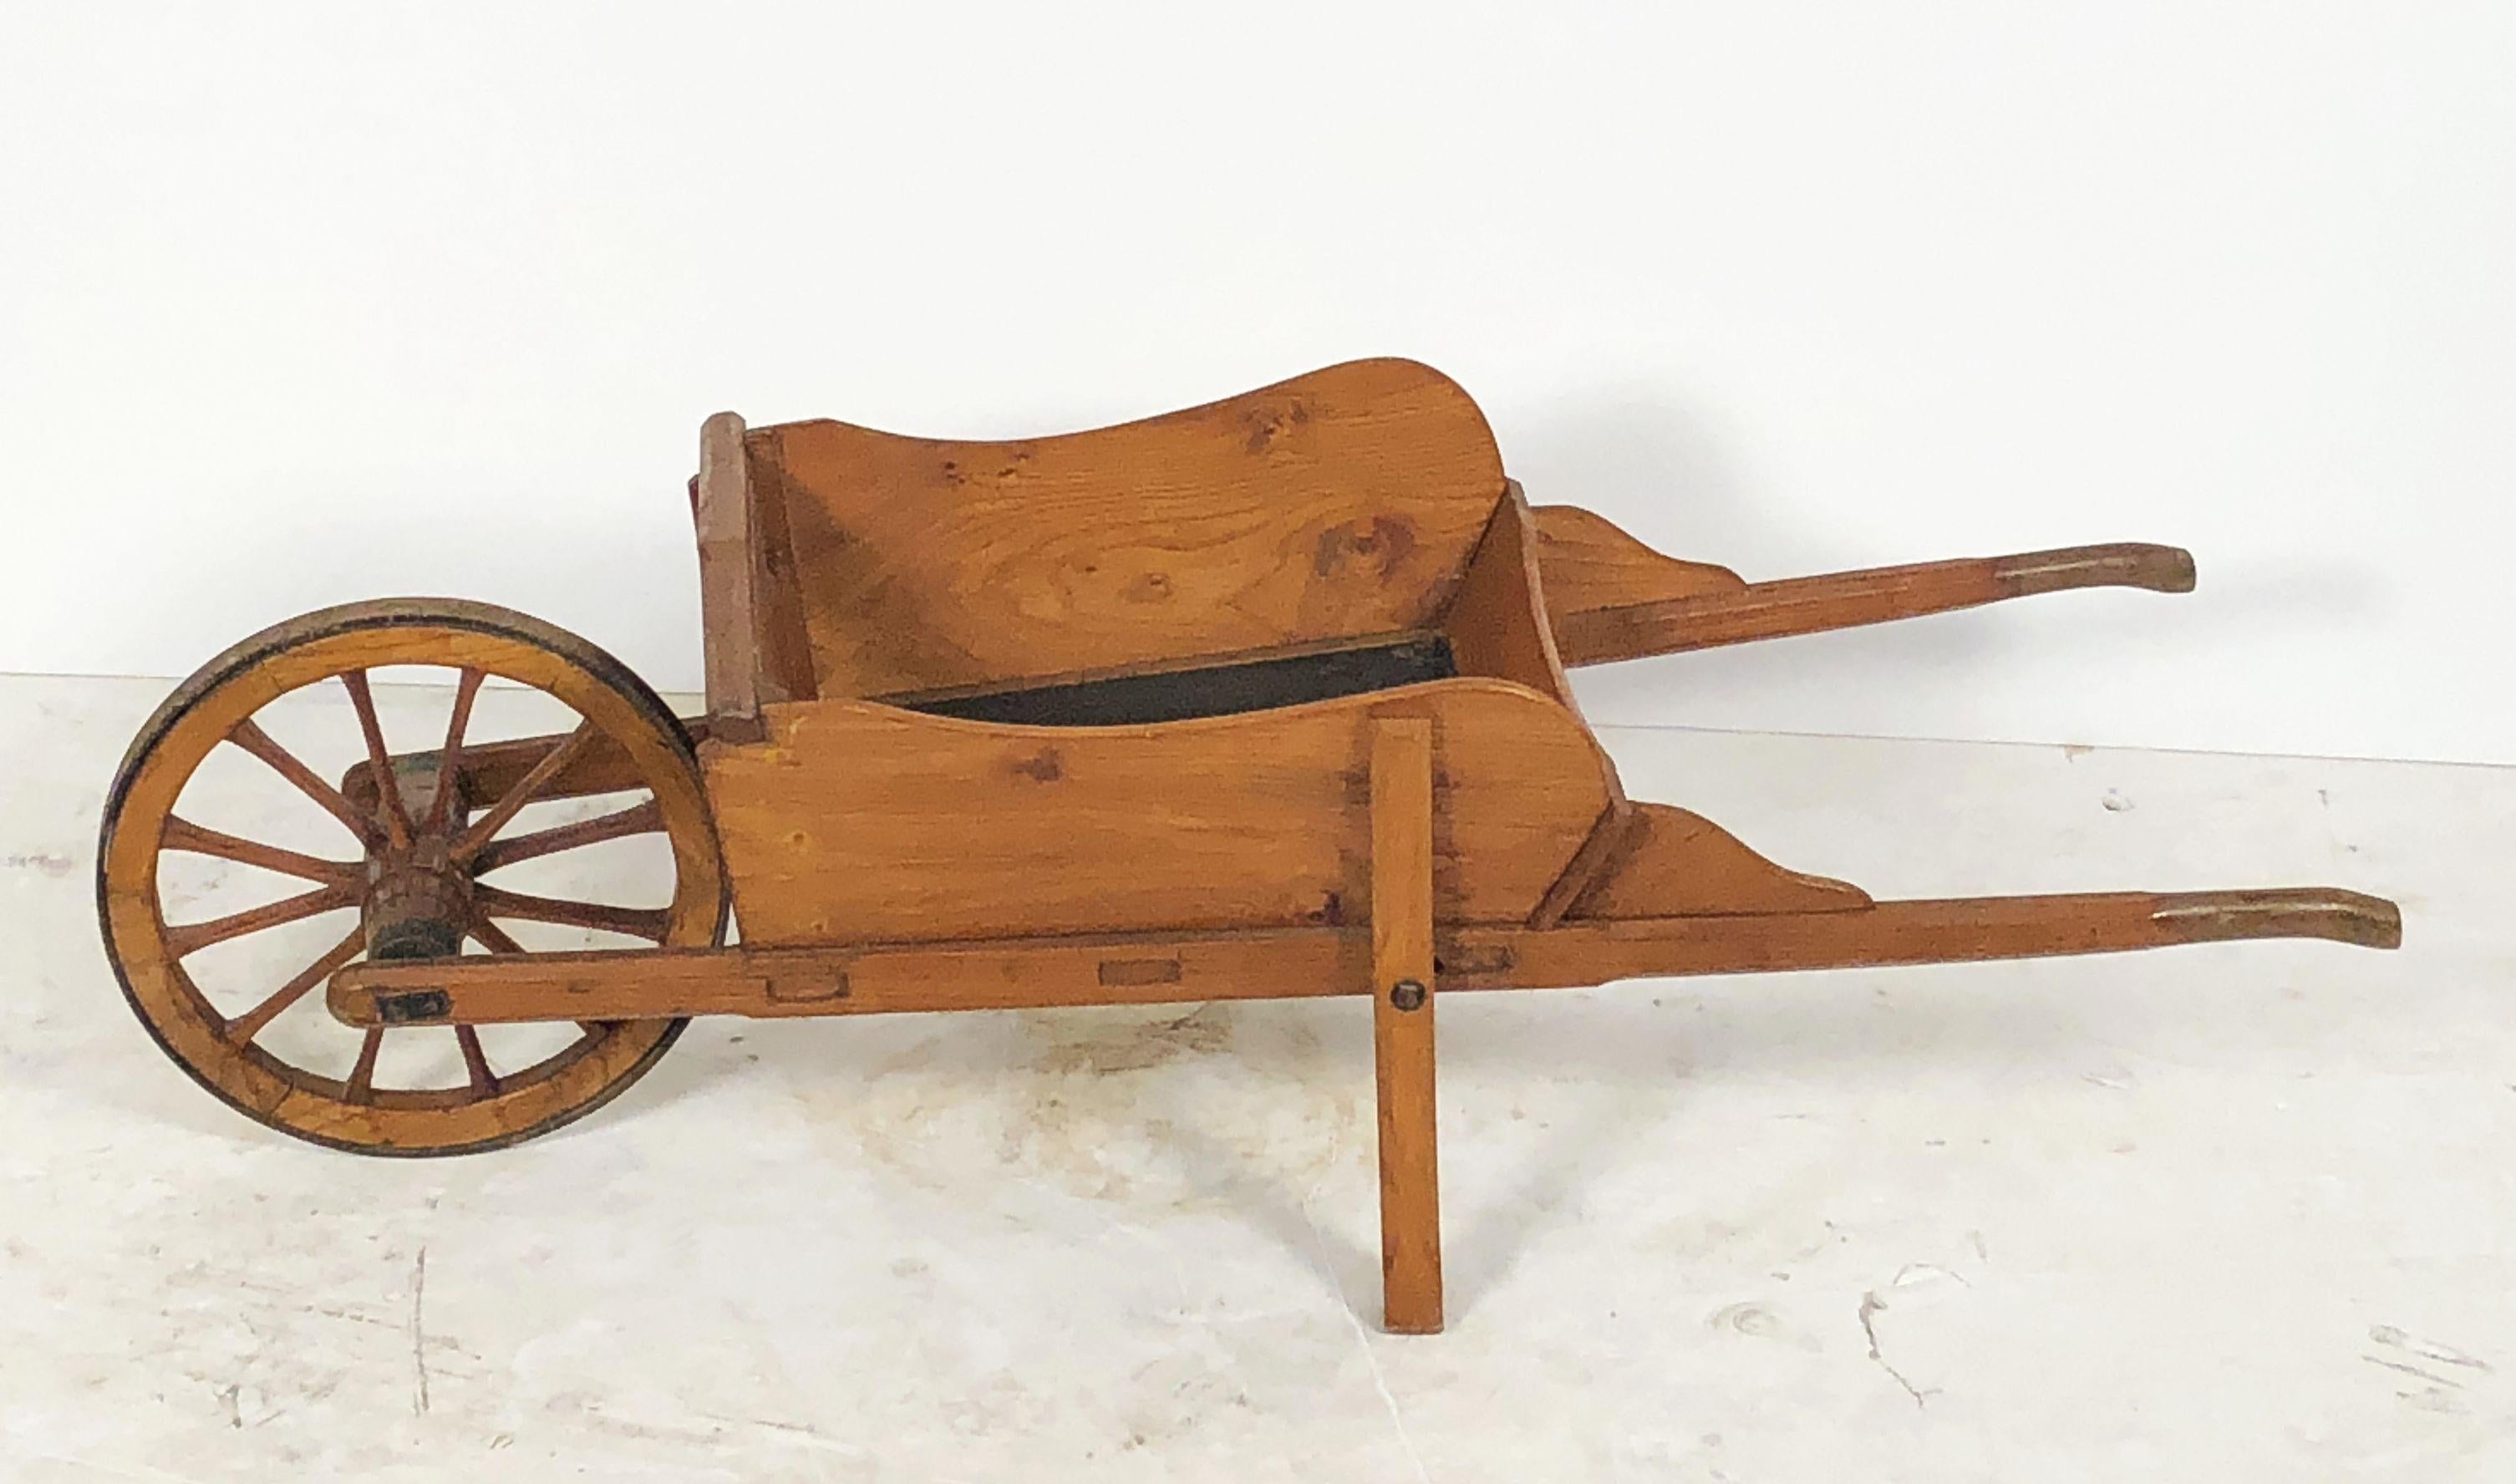 Iron Small Gardener's Wheelbarrow from England